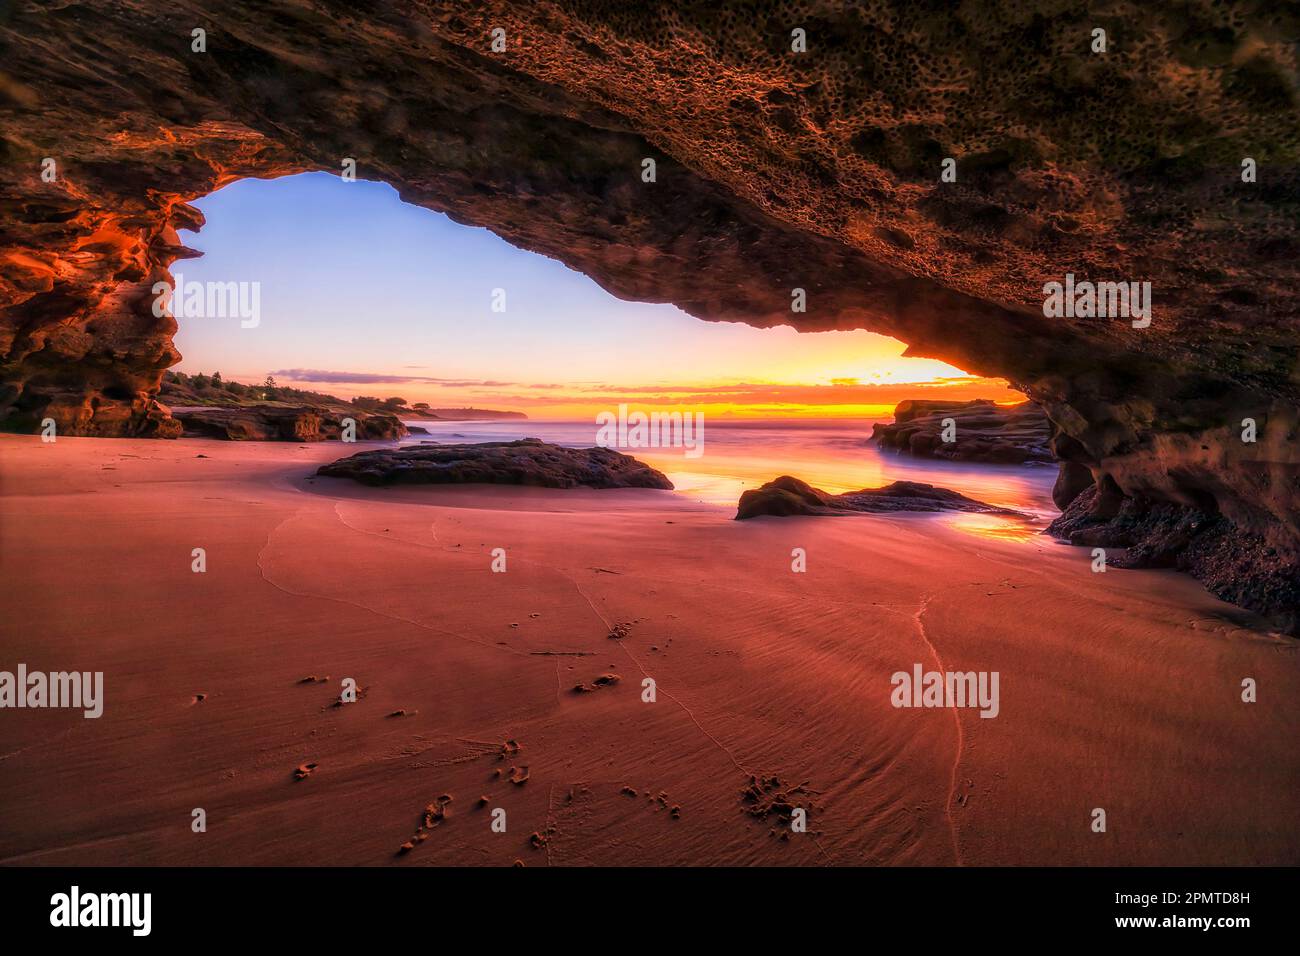 Malerische Meereshöhle am Caves Beach an der Pazifikküste Australiens bei Sonnenaufgang - extreme Meereslandschaft. Stockfoto